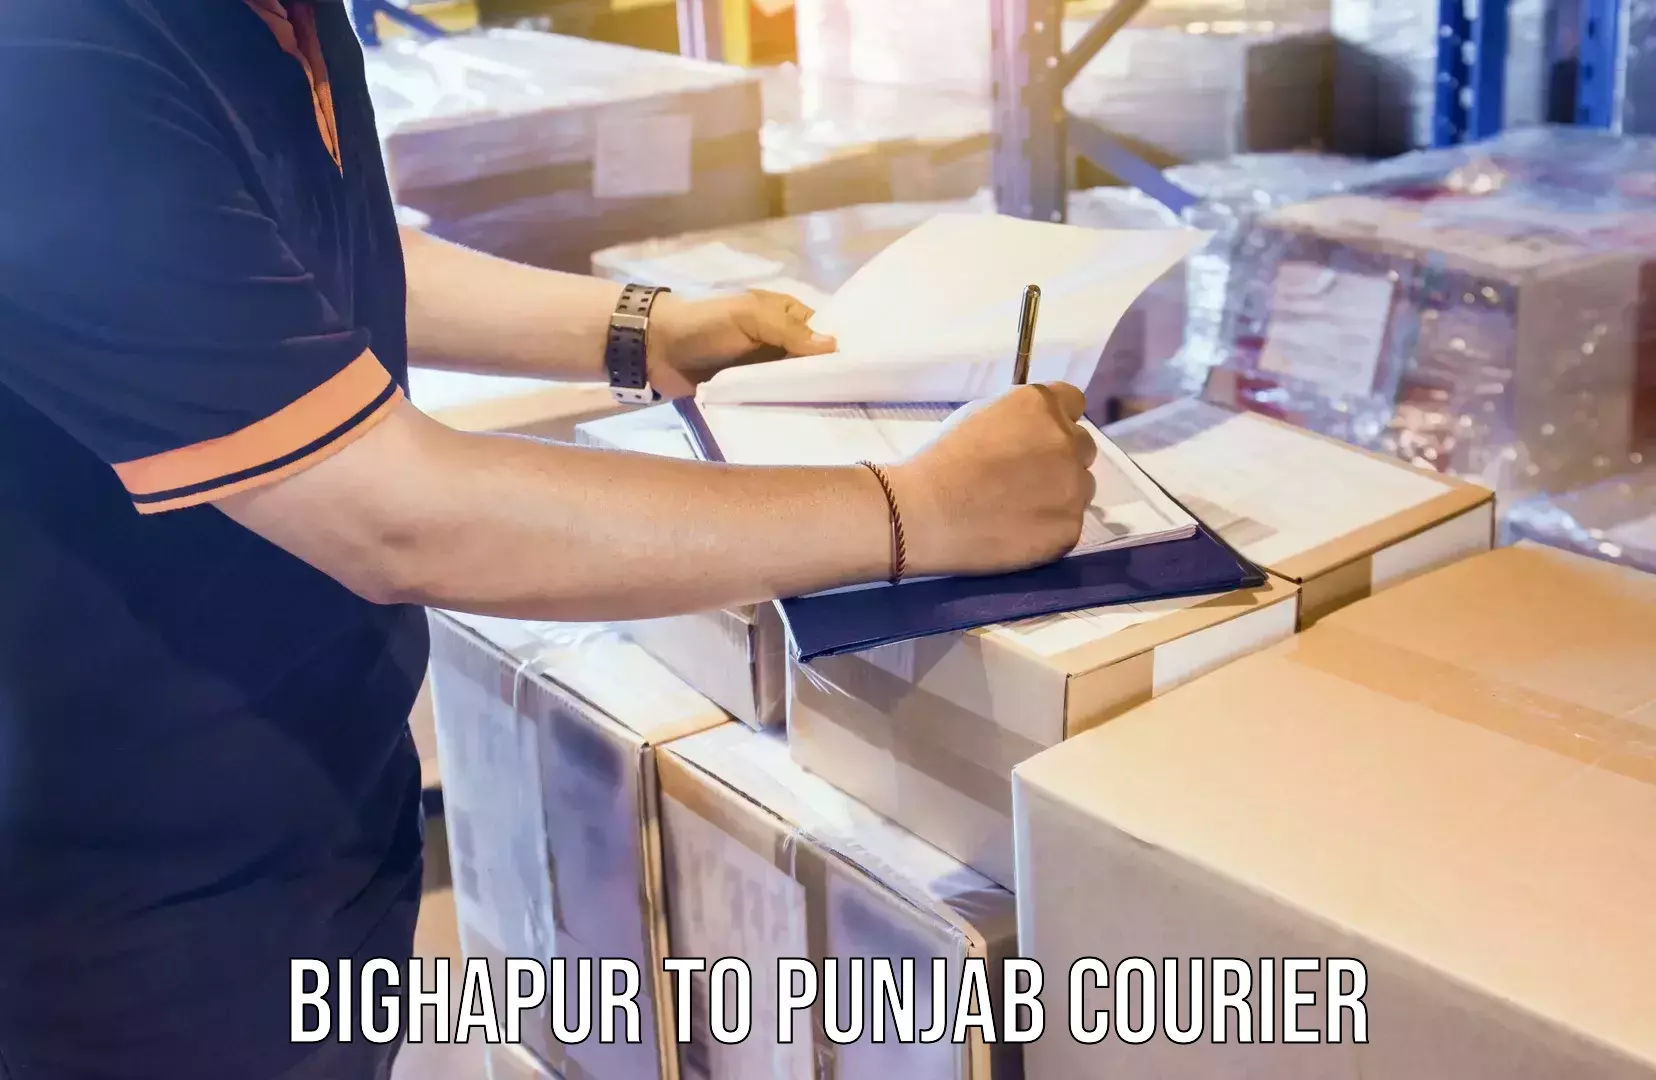 Express logistics providers Bighapur to Punjab